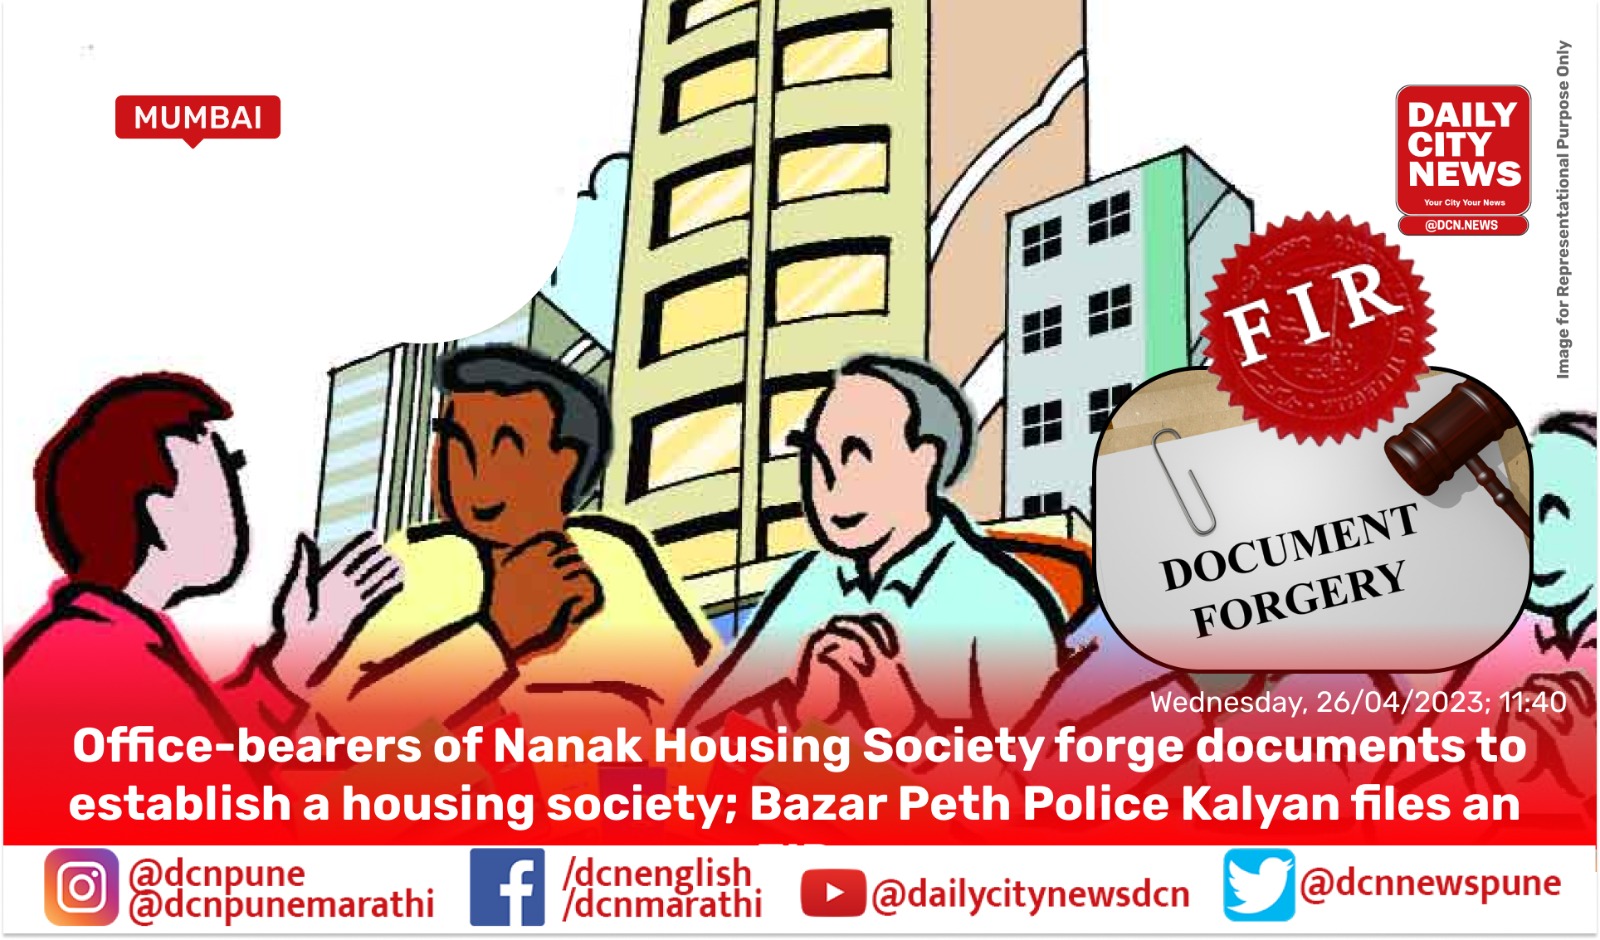 Office-bearers of Nanak Housing Society forge documents to establish a housing society; Bazar Peth Police Kalyan files an FIR